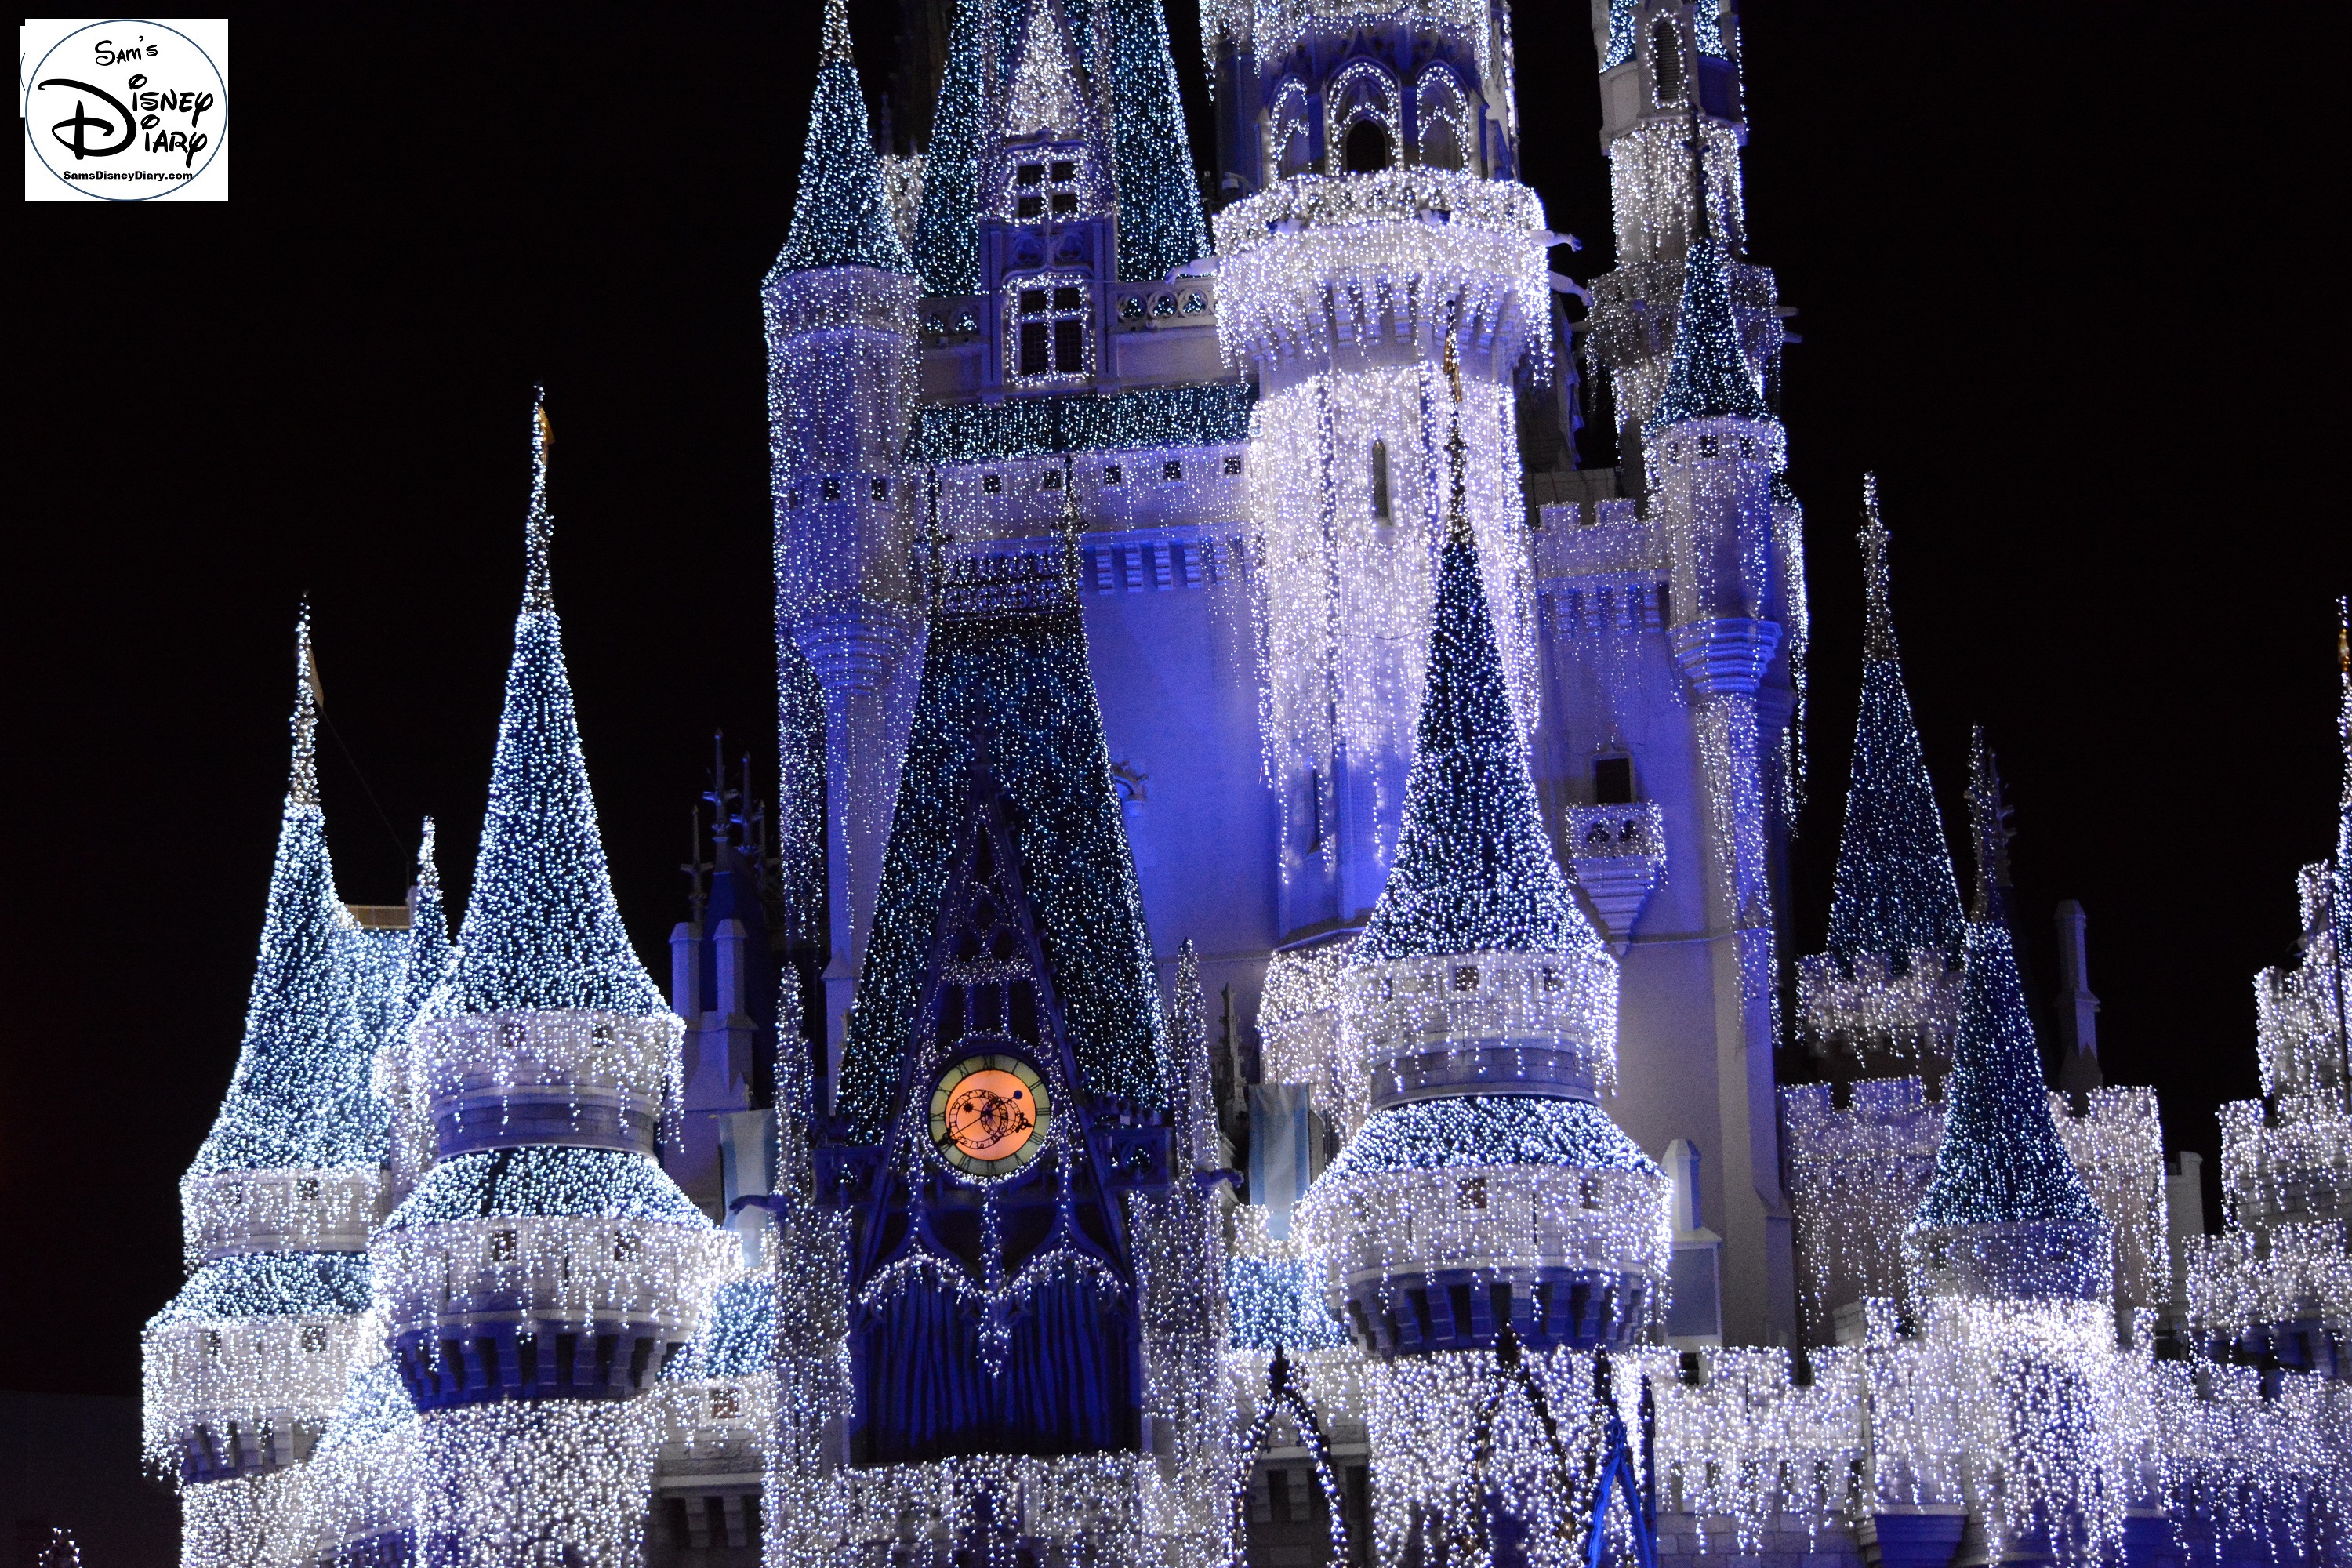 Sams Disney Diary #65 - Castle Transformation complete